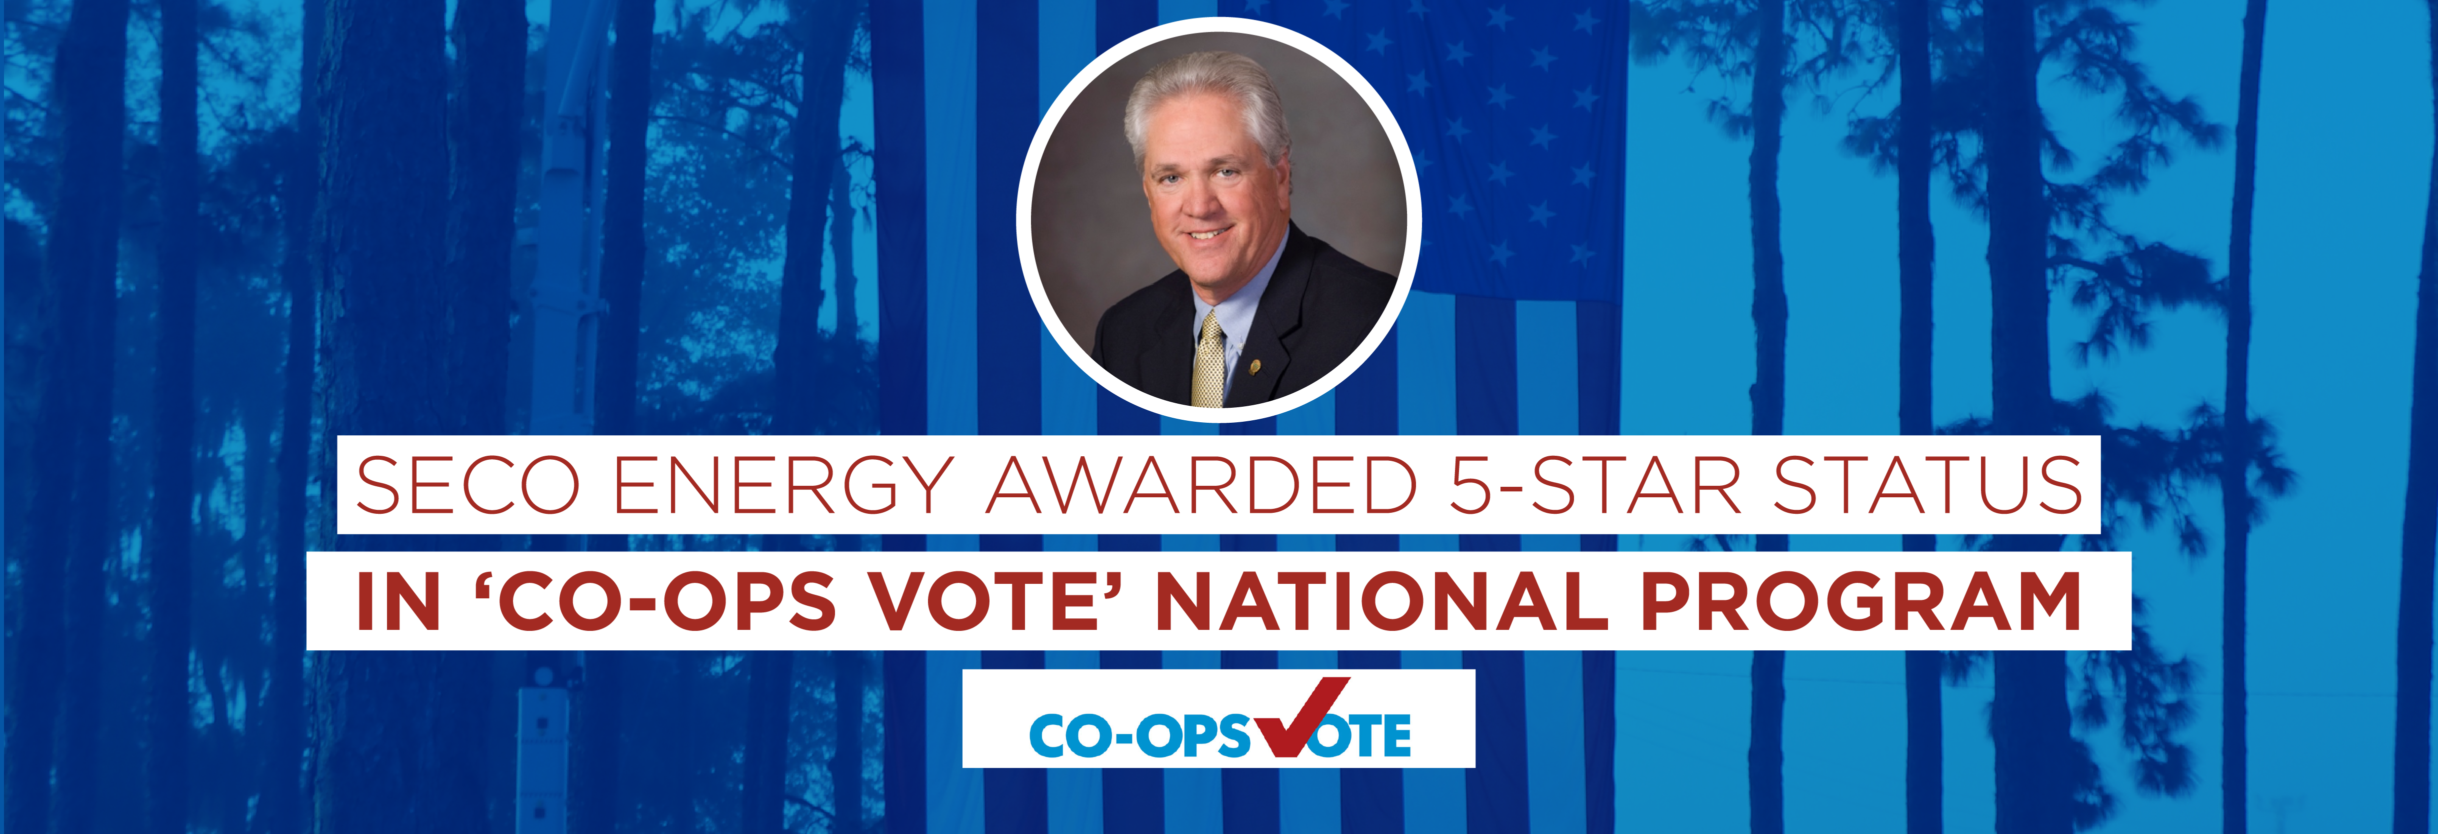 SECO Energy Awarded 5-Star Status in ‘Co-ops Vote’ National Program